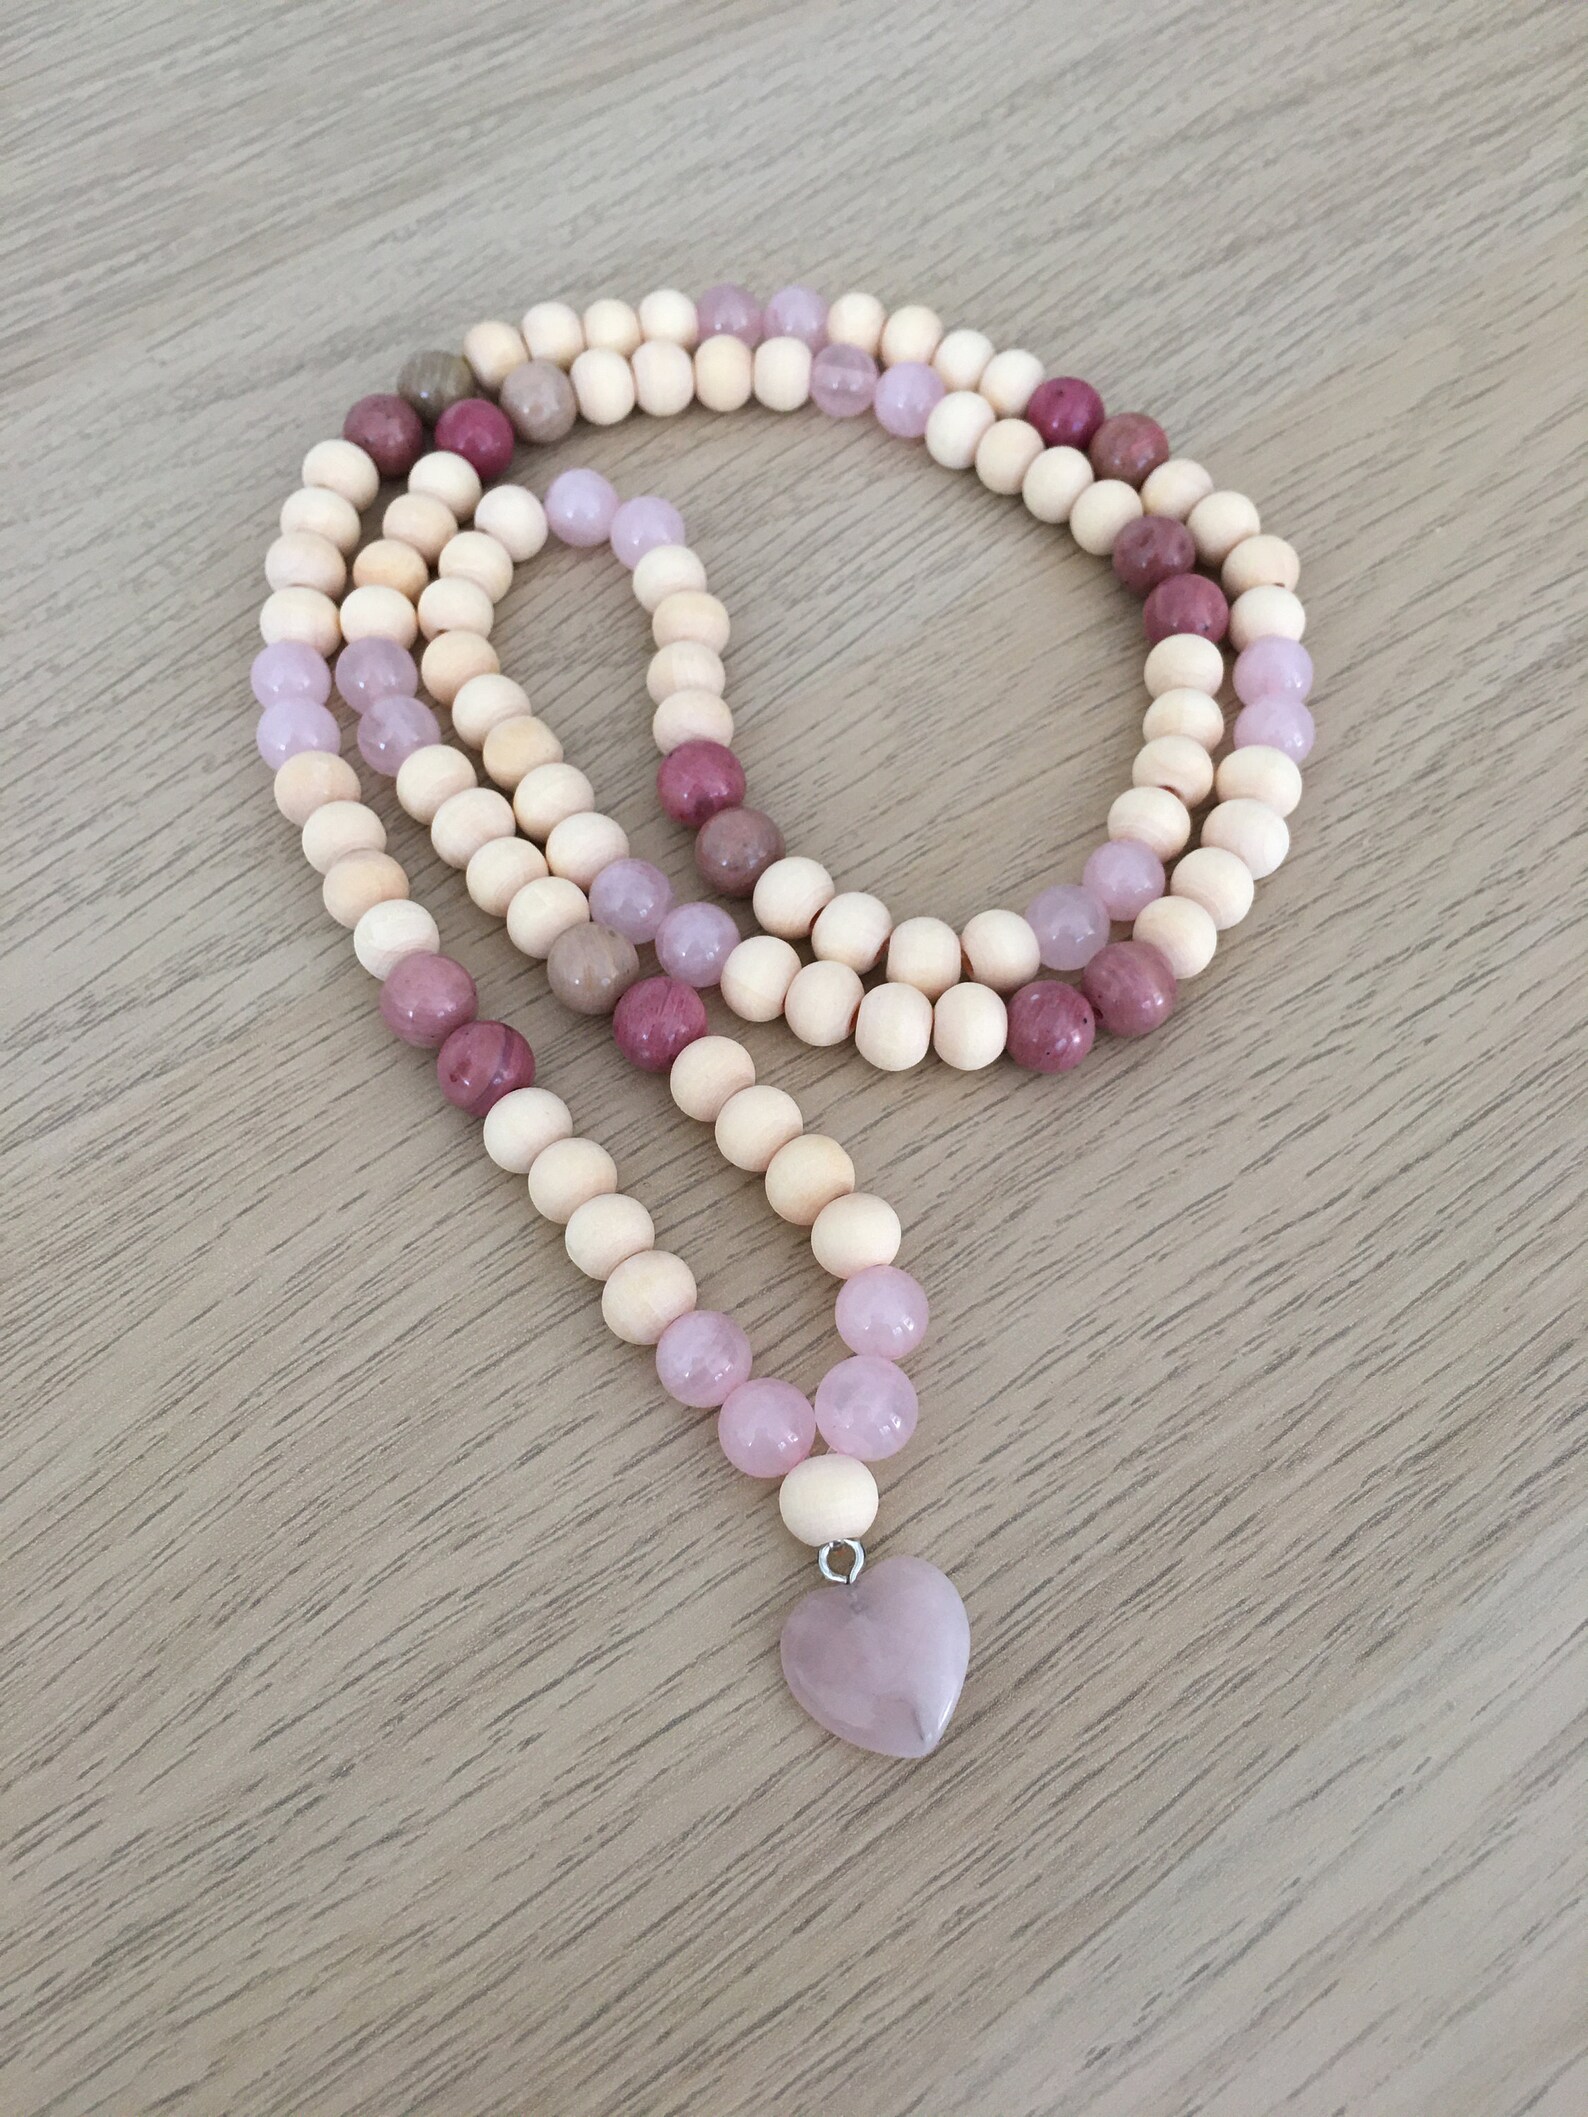 108 Heart Mala Beads rose quartz mala beads 108 mala beads | Etsy